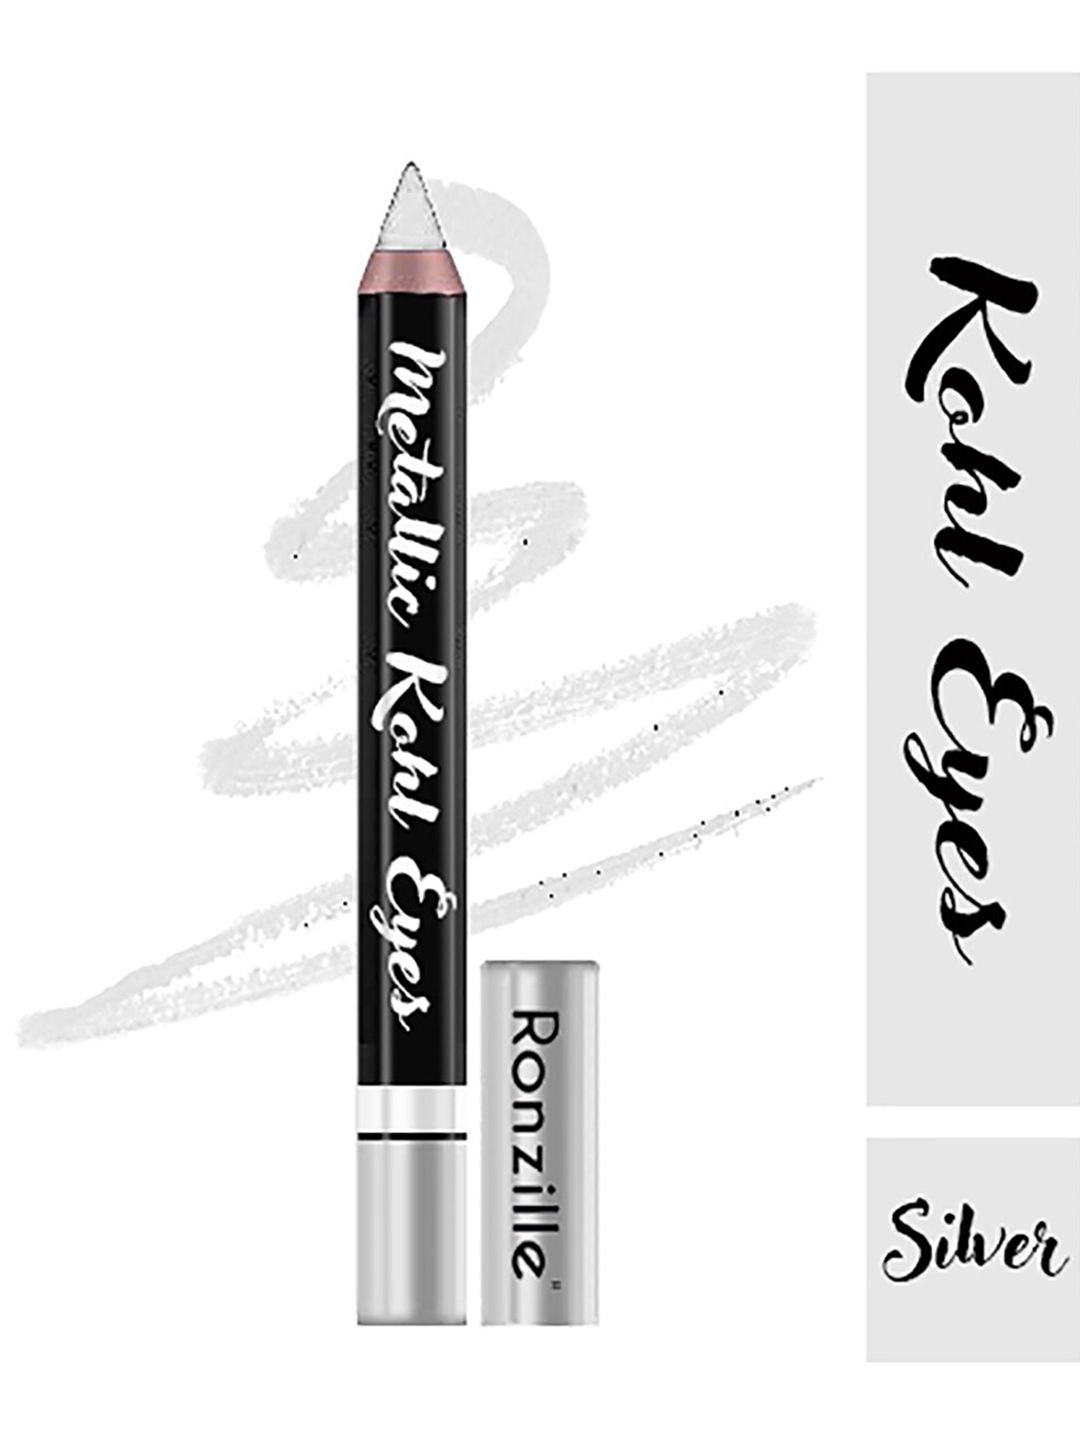 Ronzille Metallic Kohl Pencil Kajal Eyeliner Eyeshadow Silver 2.5 gm Price in India